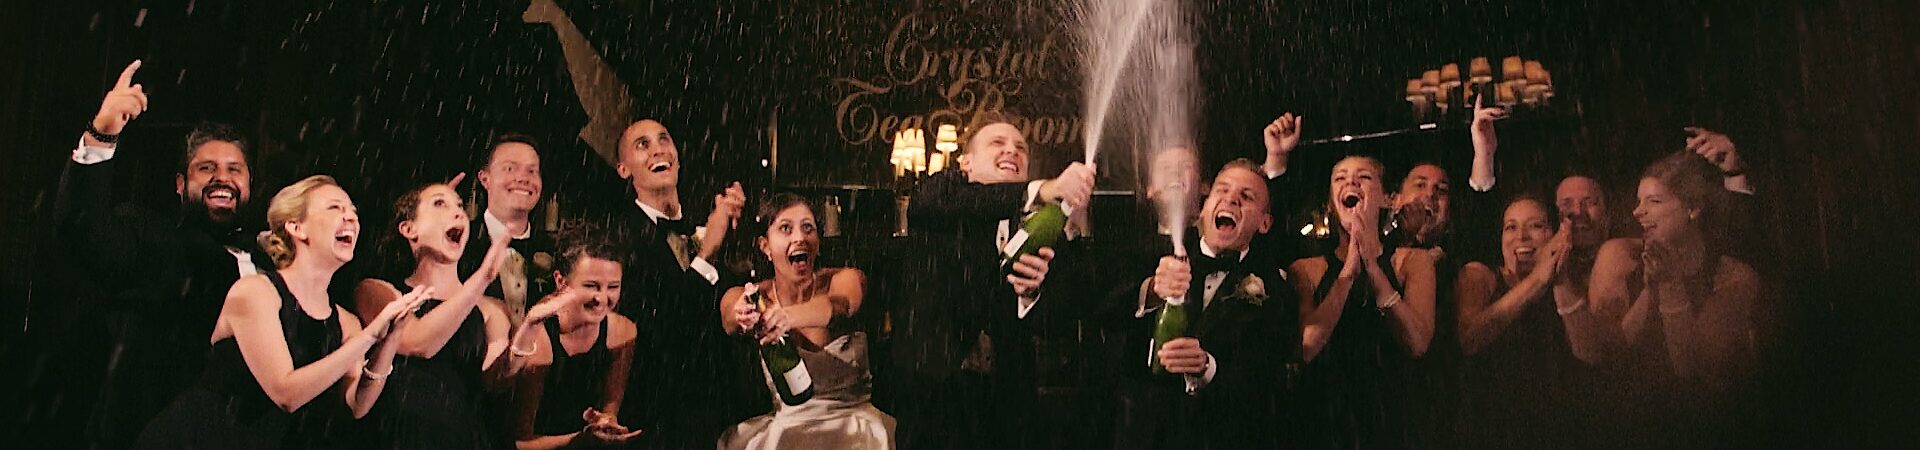 champagne splash at wedding